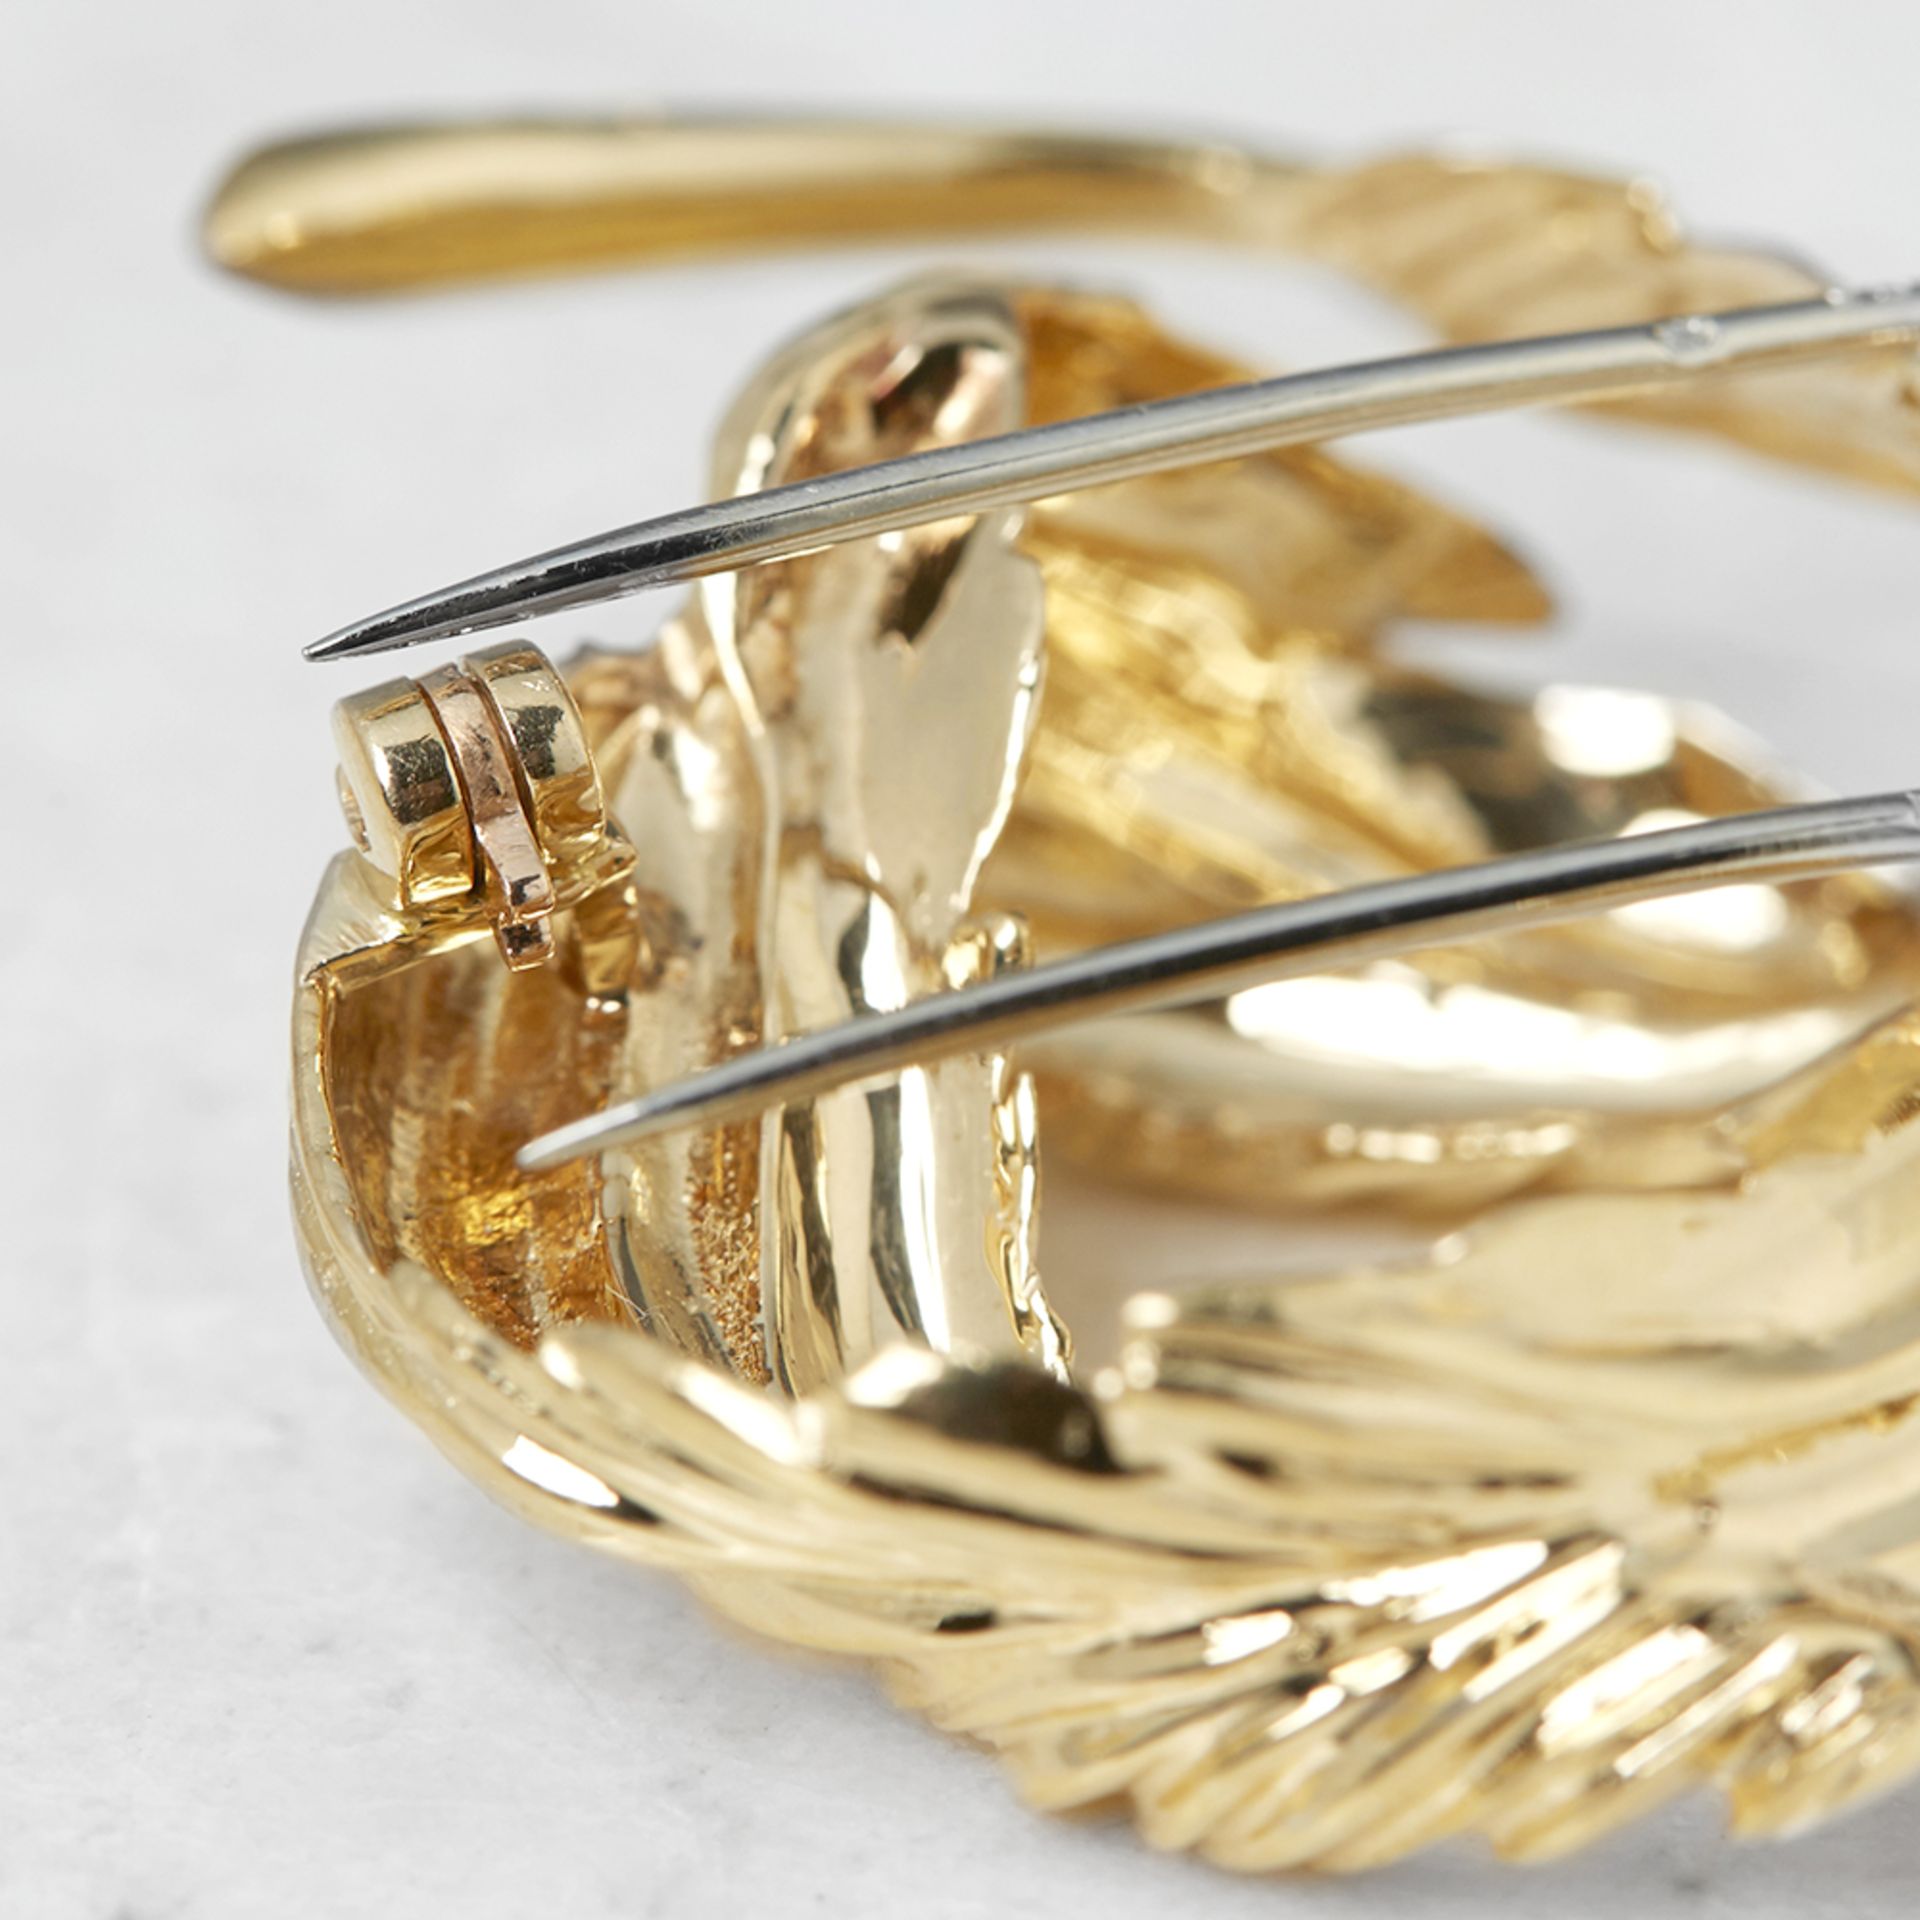 Van Cleef & Arpels 18k Yellow Gold Feather Design Brooch - Image 4 of 5